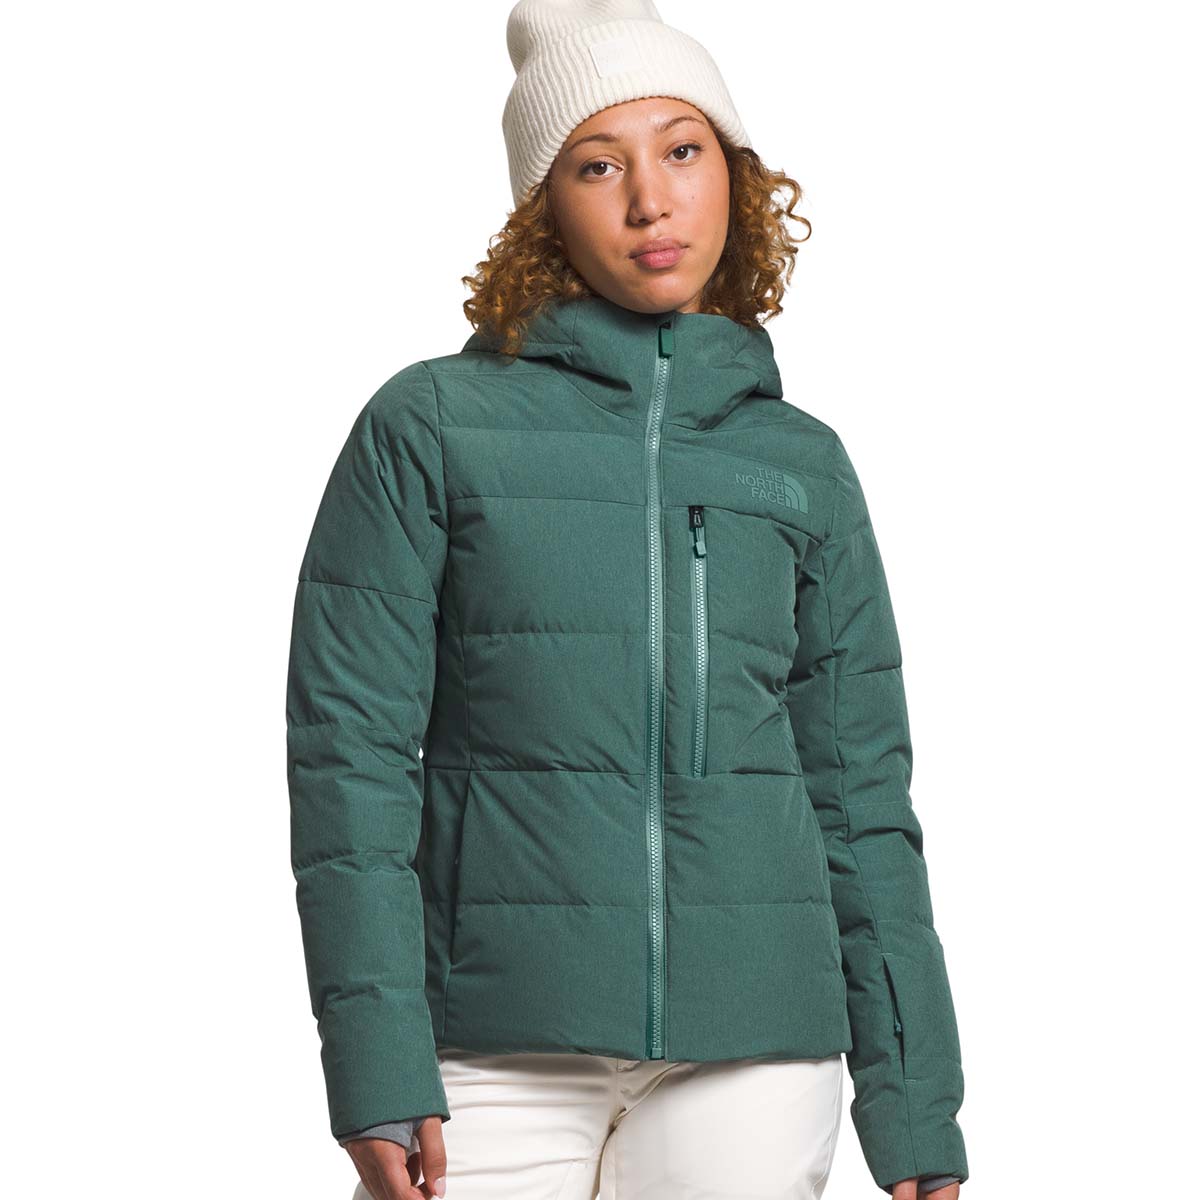 Vermont Gear - Farm-Way: Women's Jackets - Coats